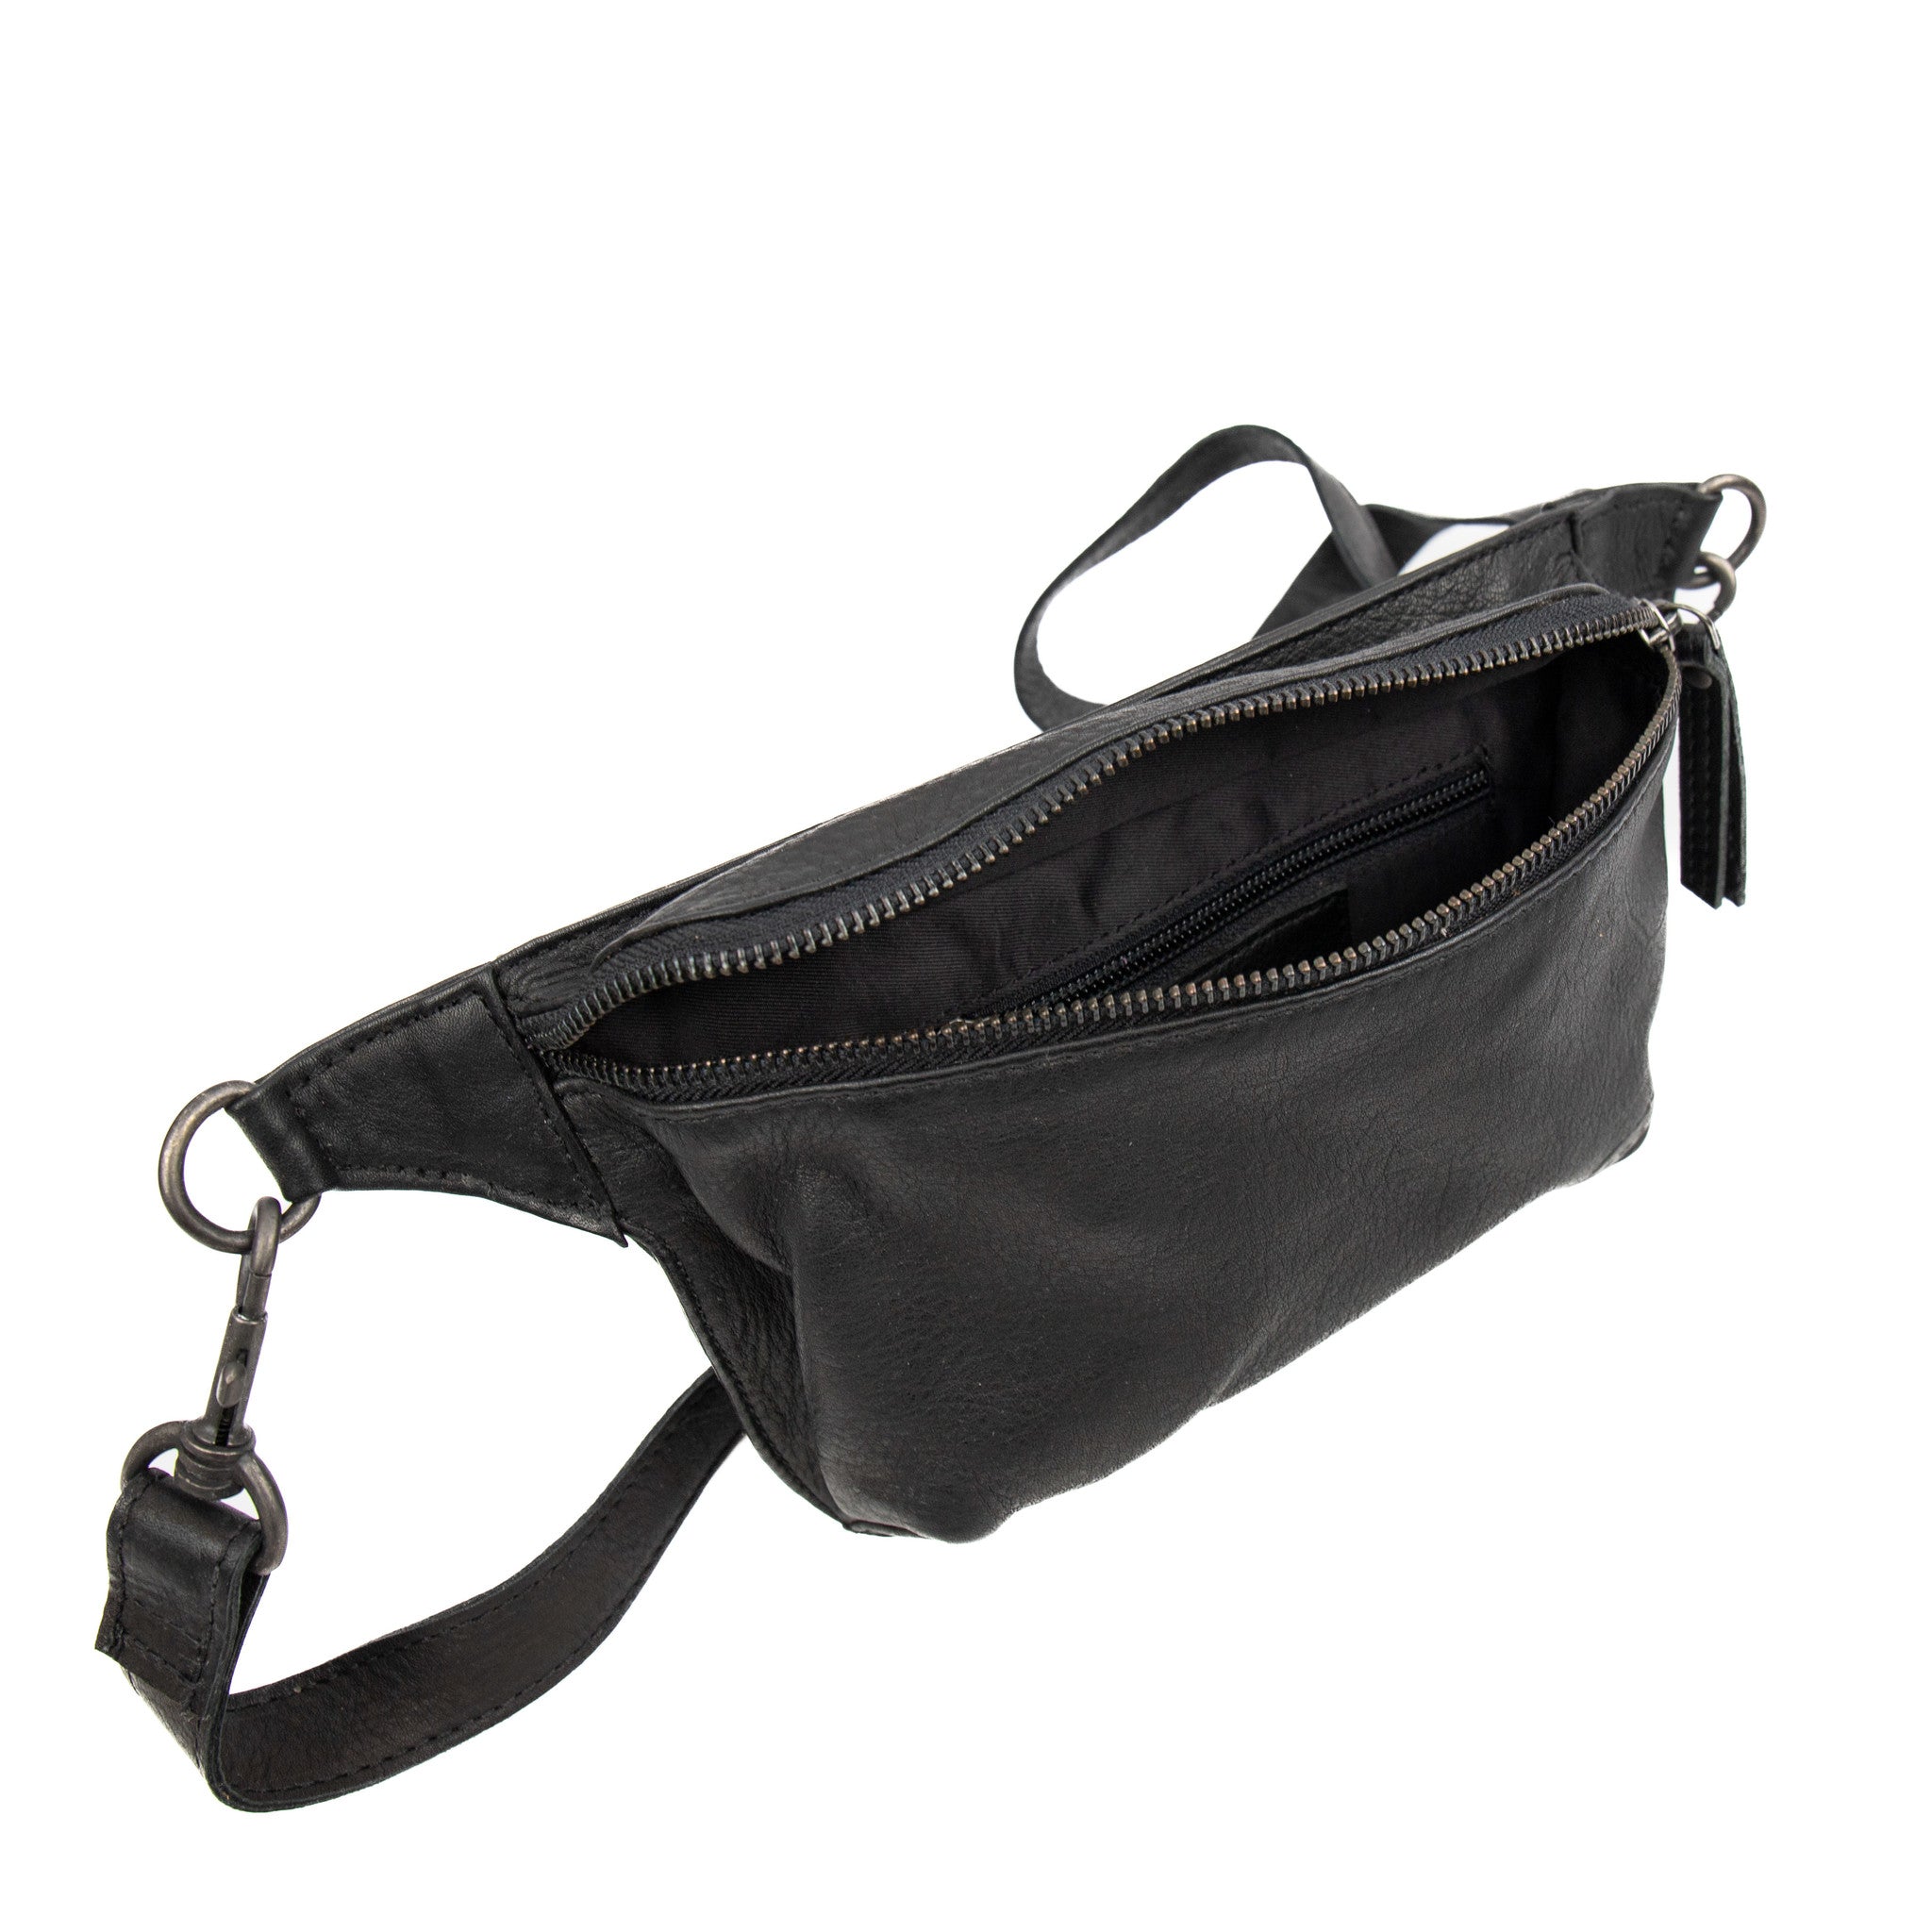 Waist bag 'Stef' black - CP 2352